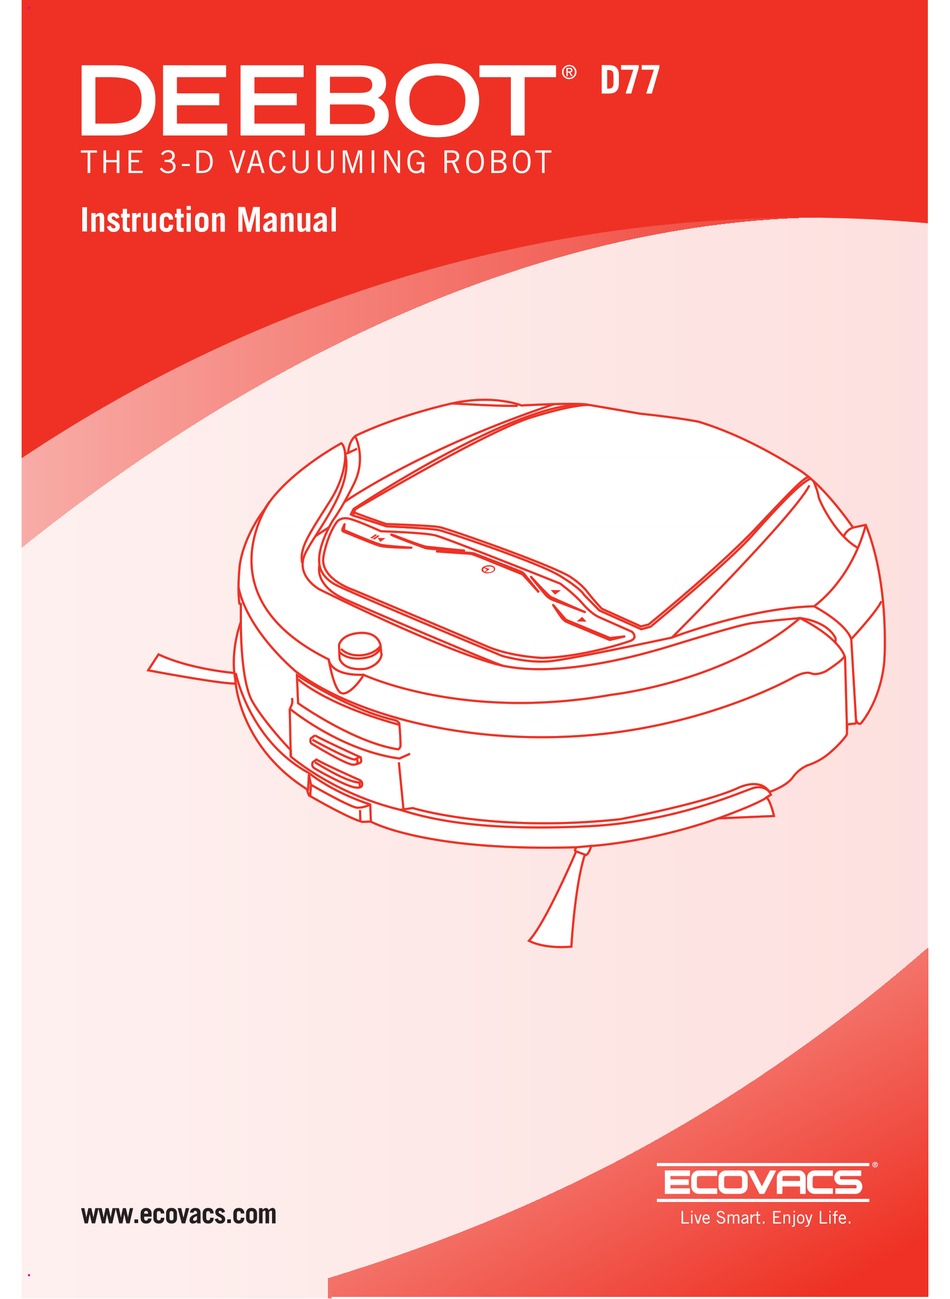 ECOVACS DEEBOT D77 INSTRUCTION MANUAL Pdf Download | ManualsLib